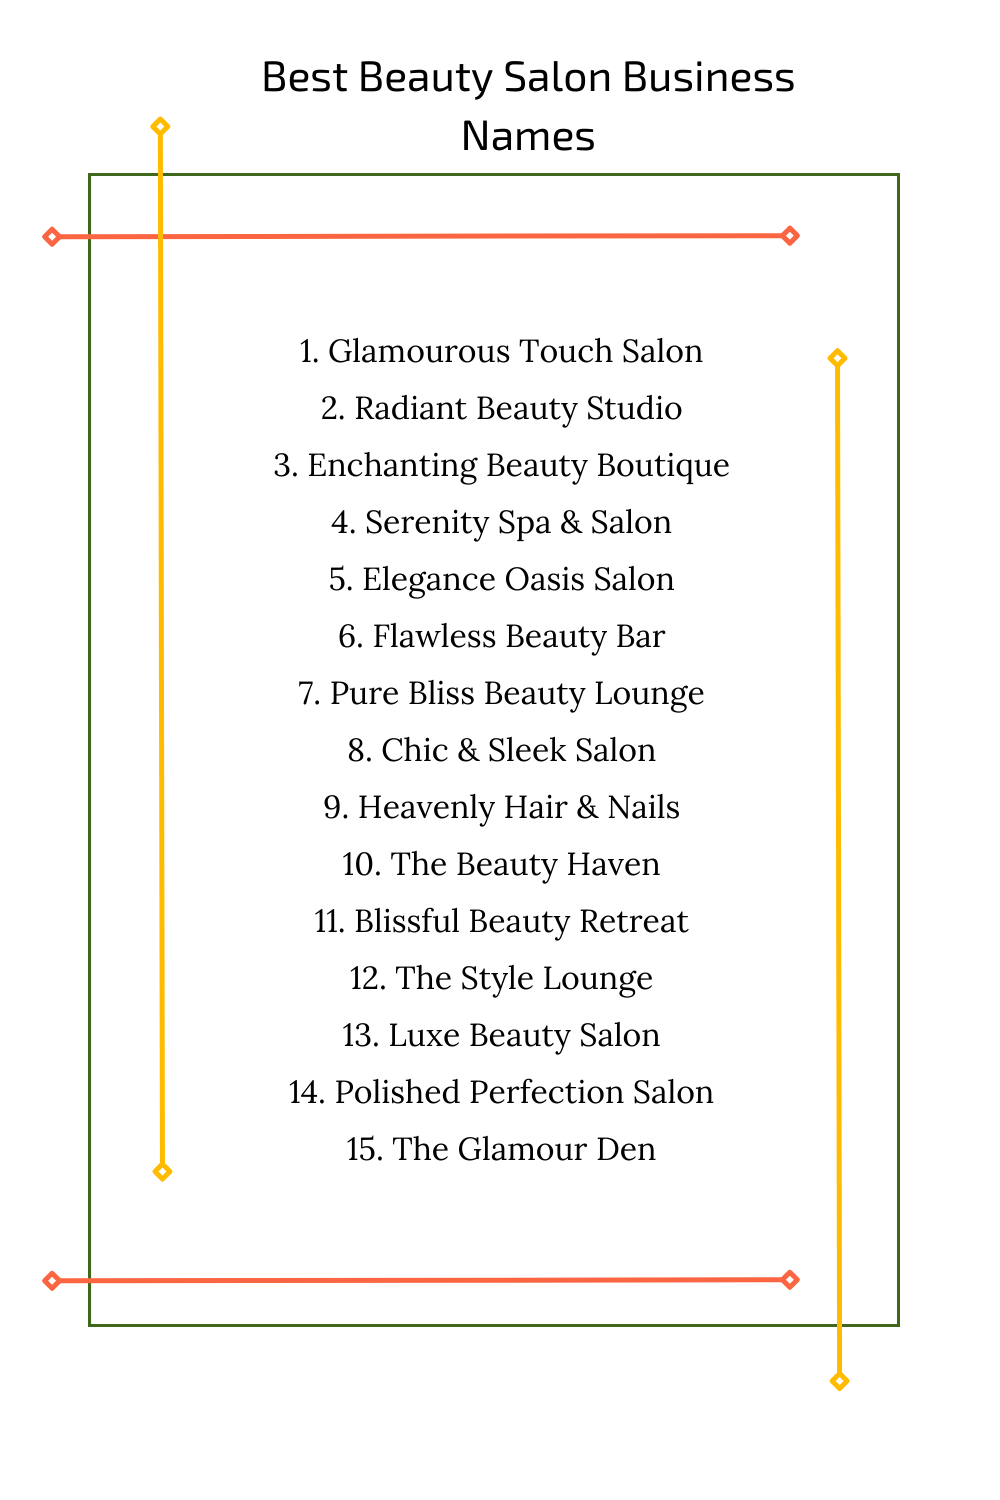 Best Beauty Salon Business Names